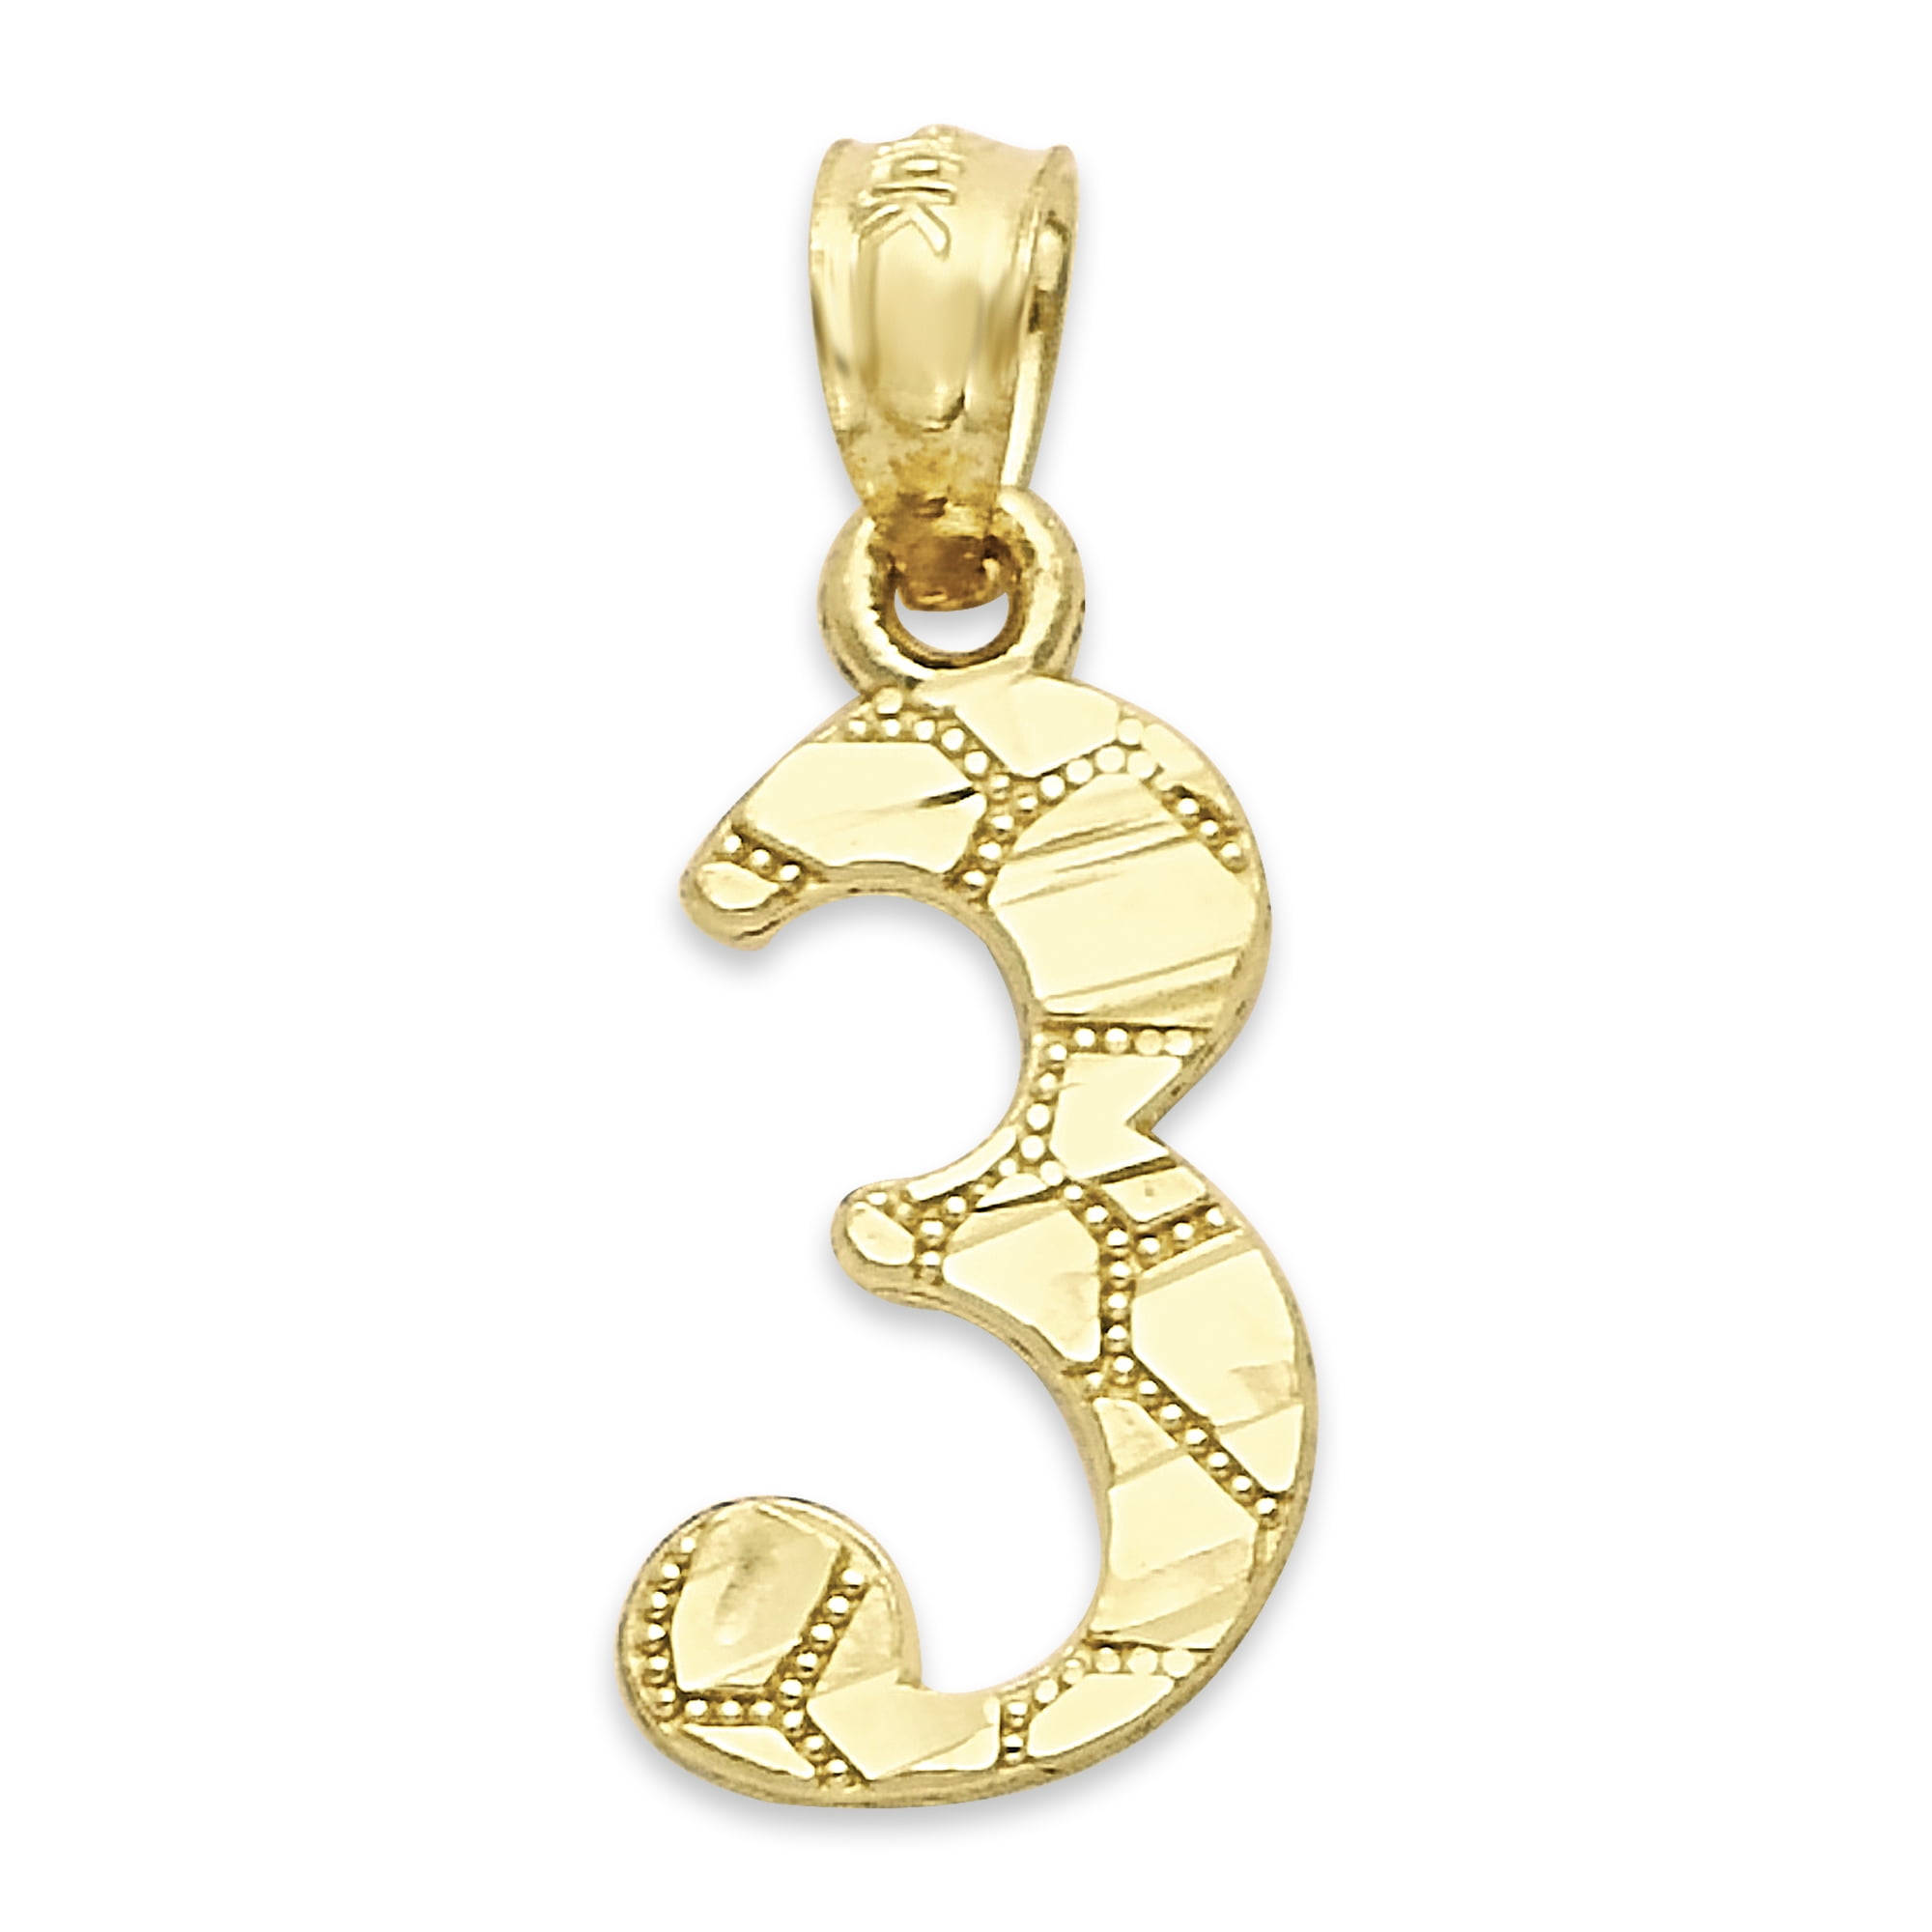 Number Charm - Number Charm | Ana Luisa Jewelry